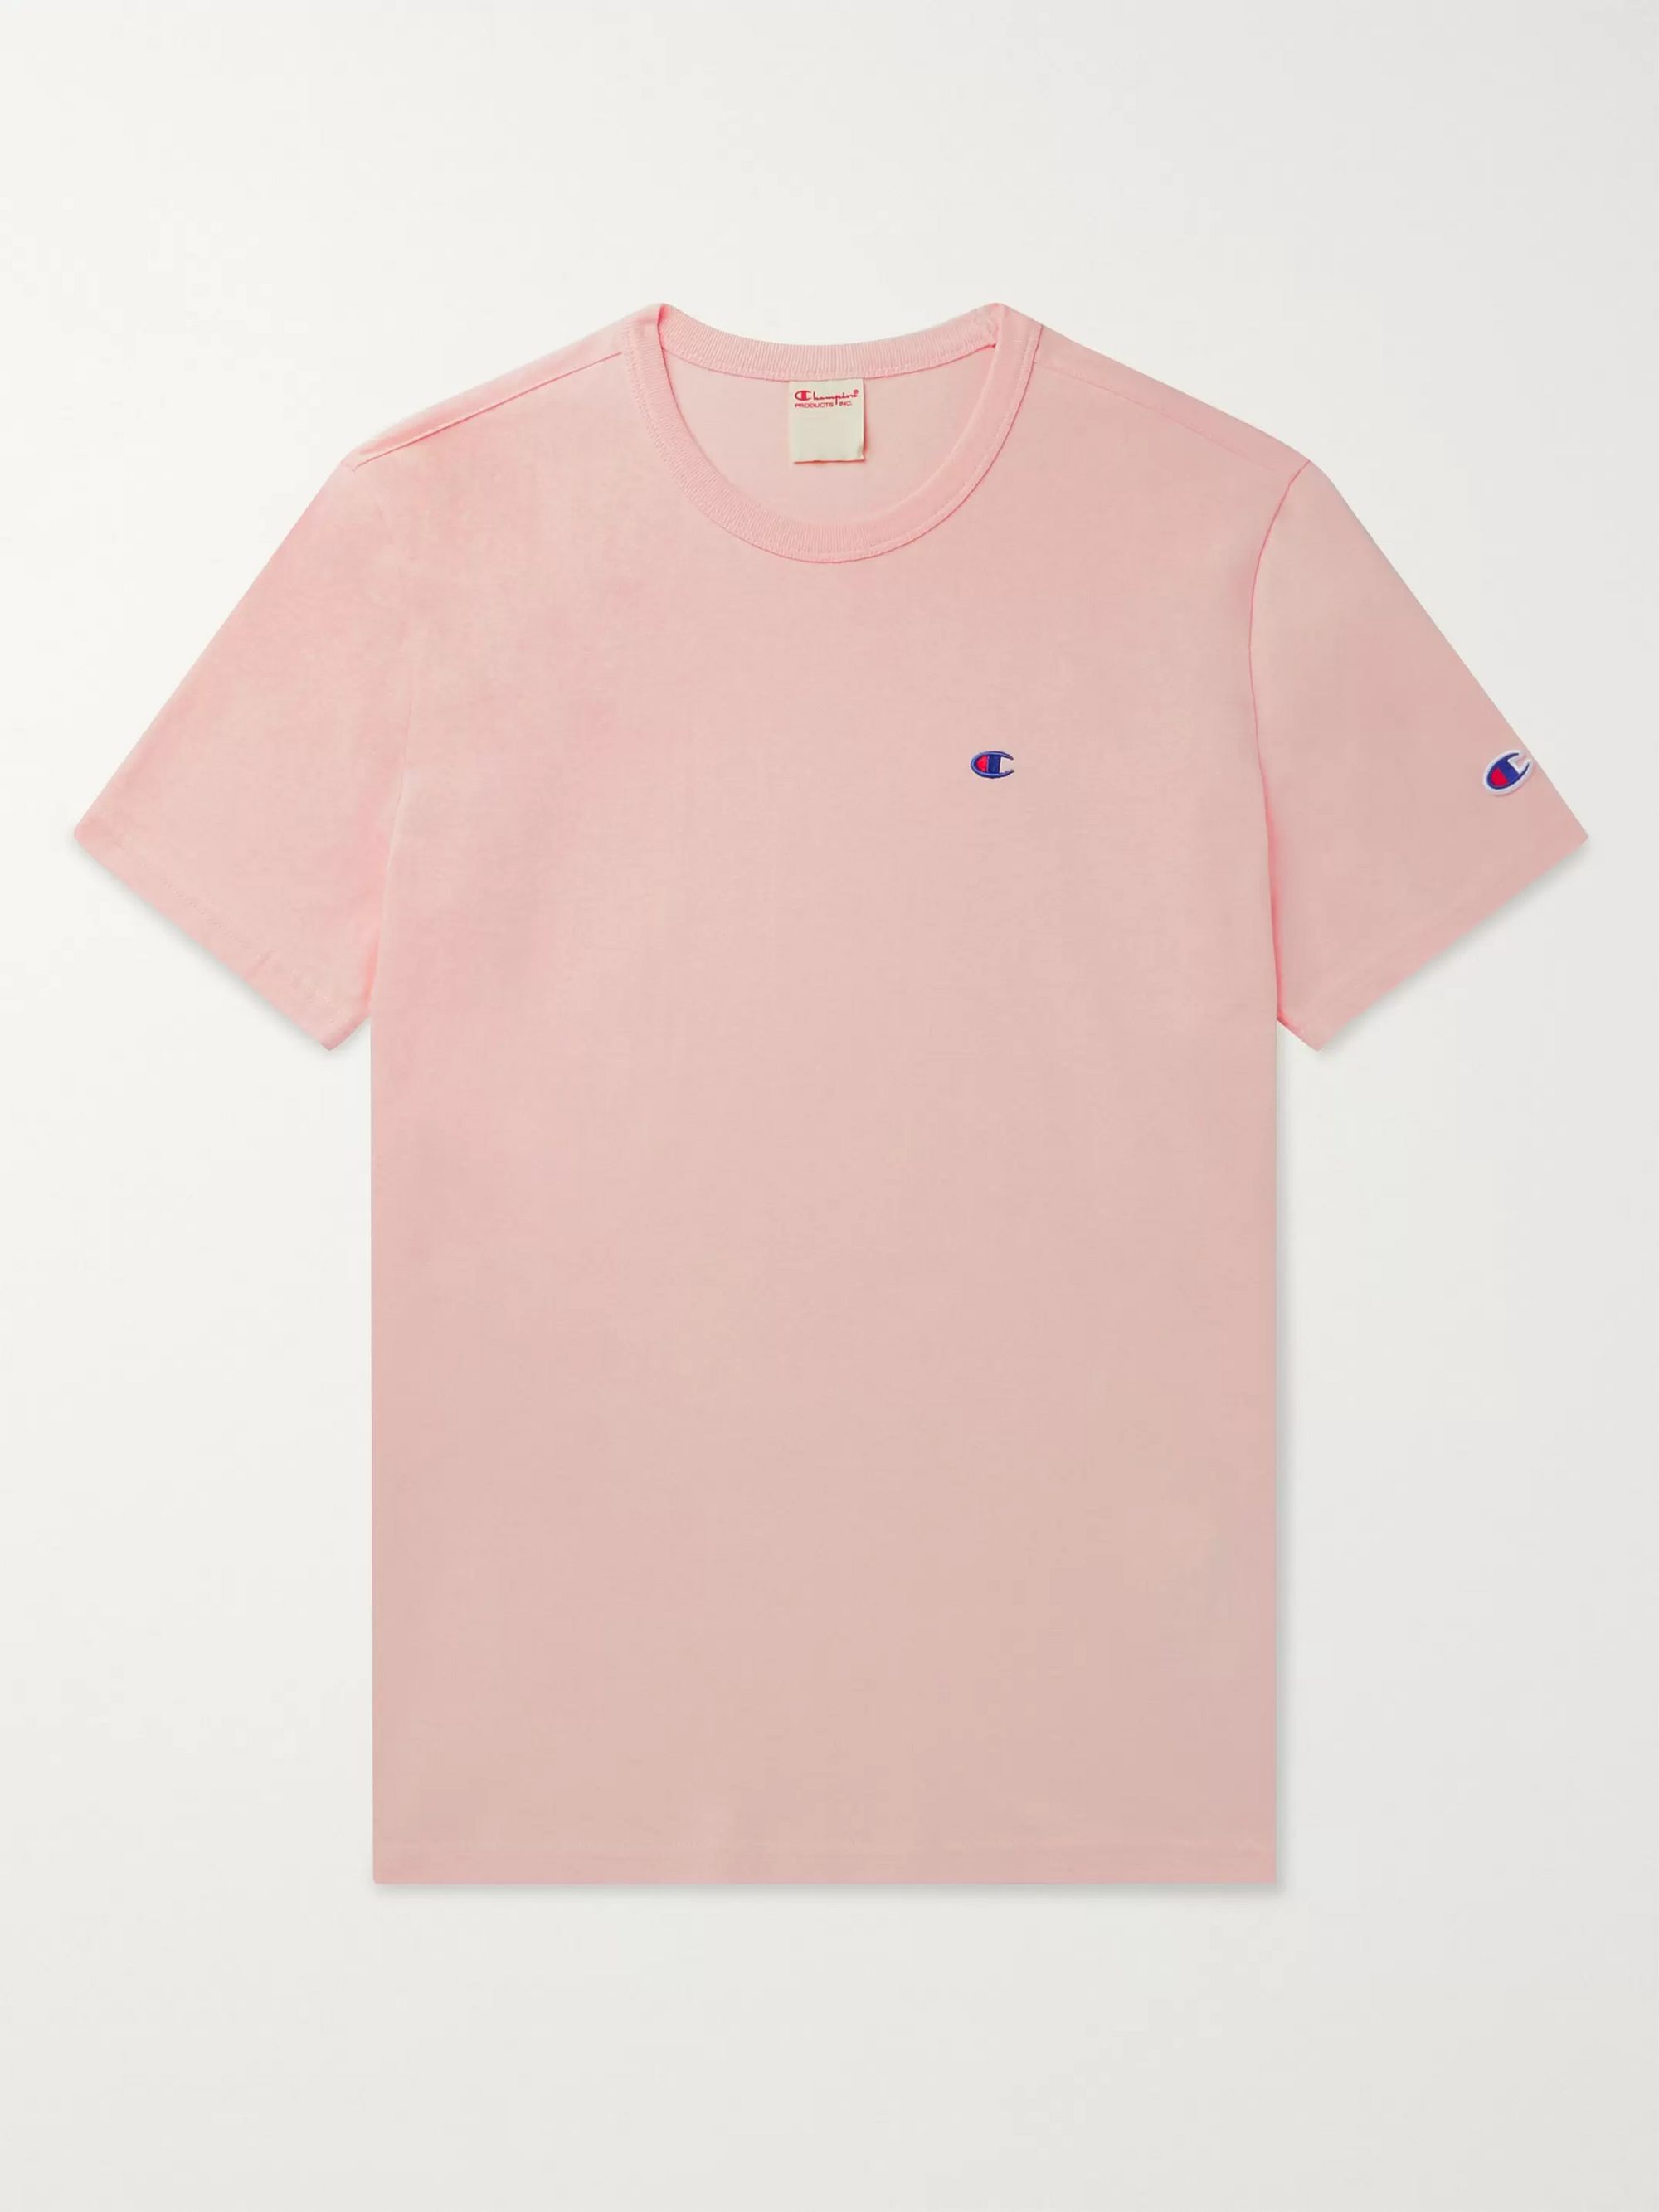 pink champion t shirt